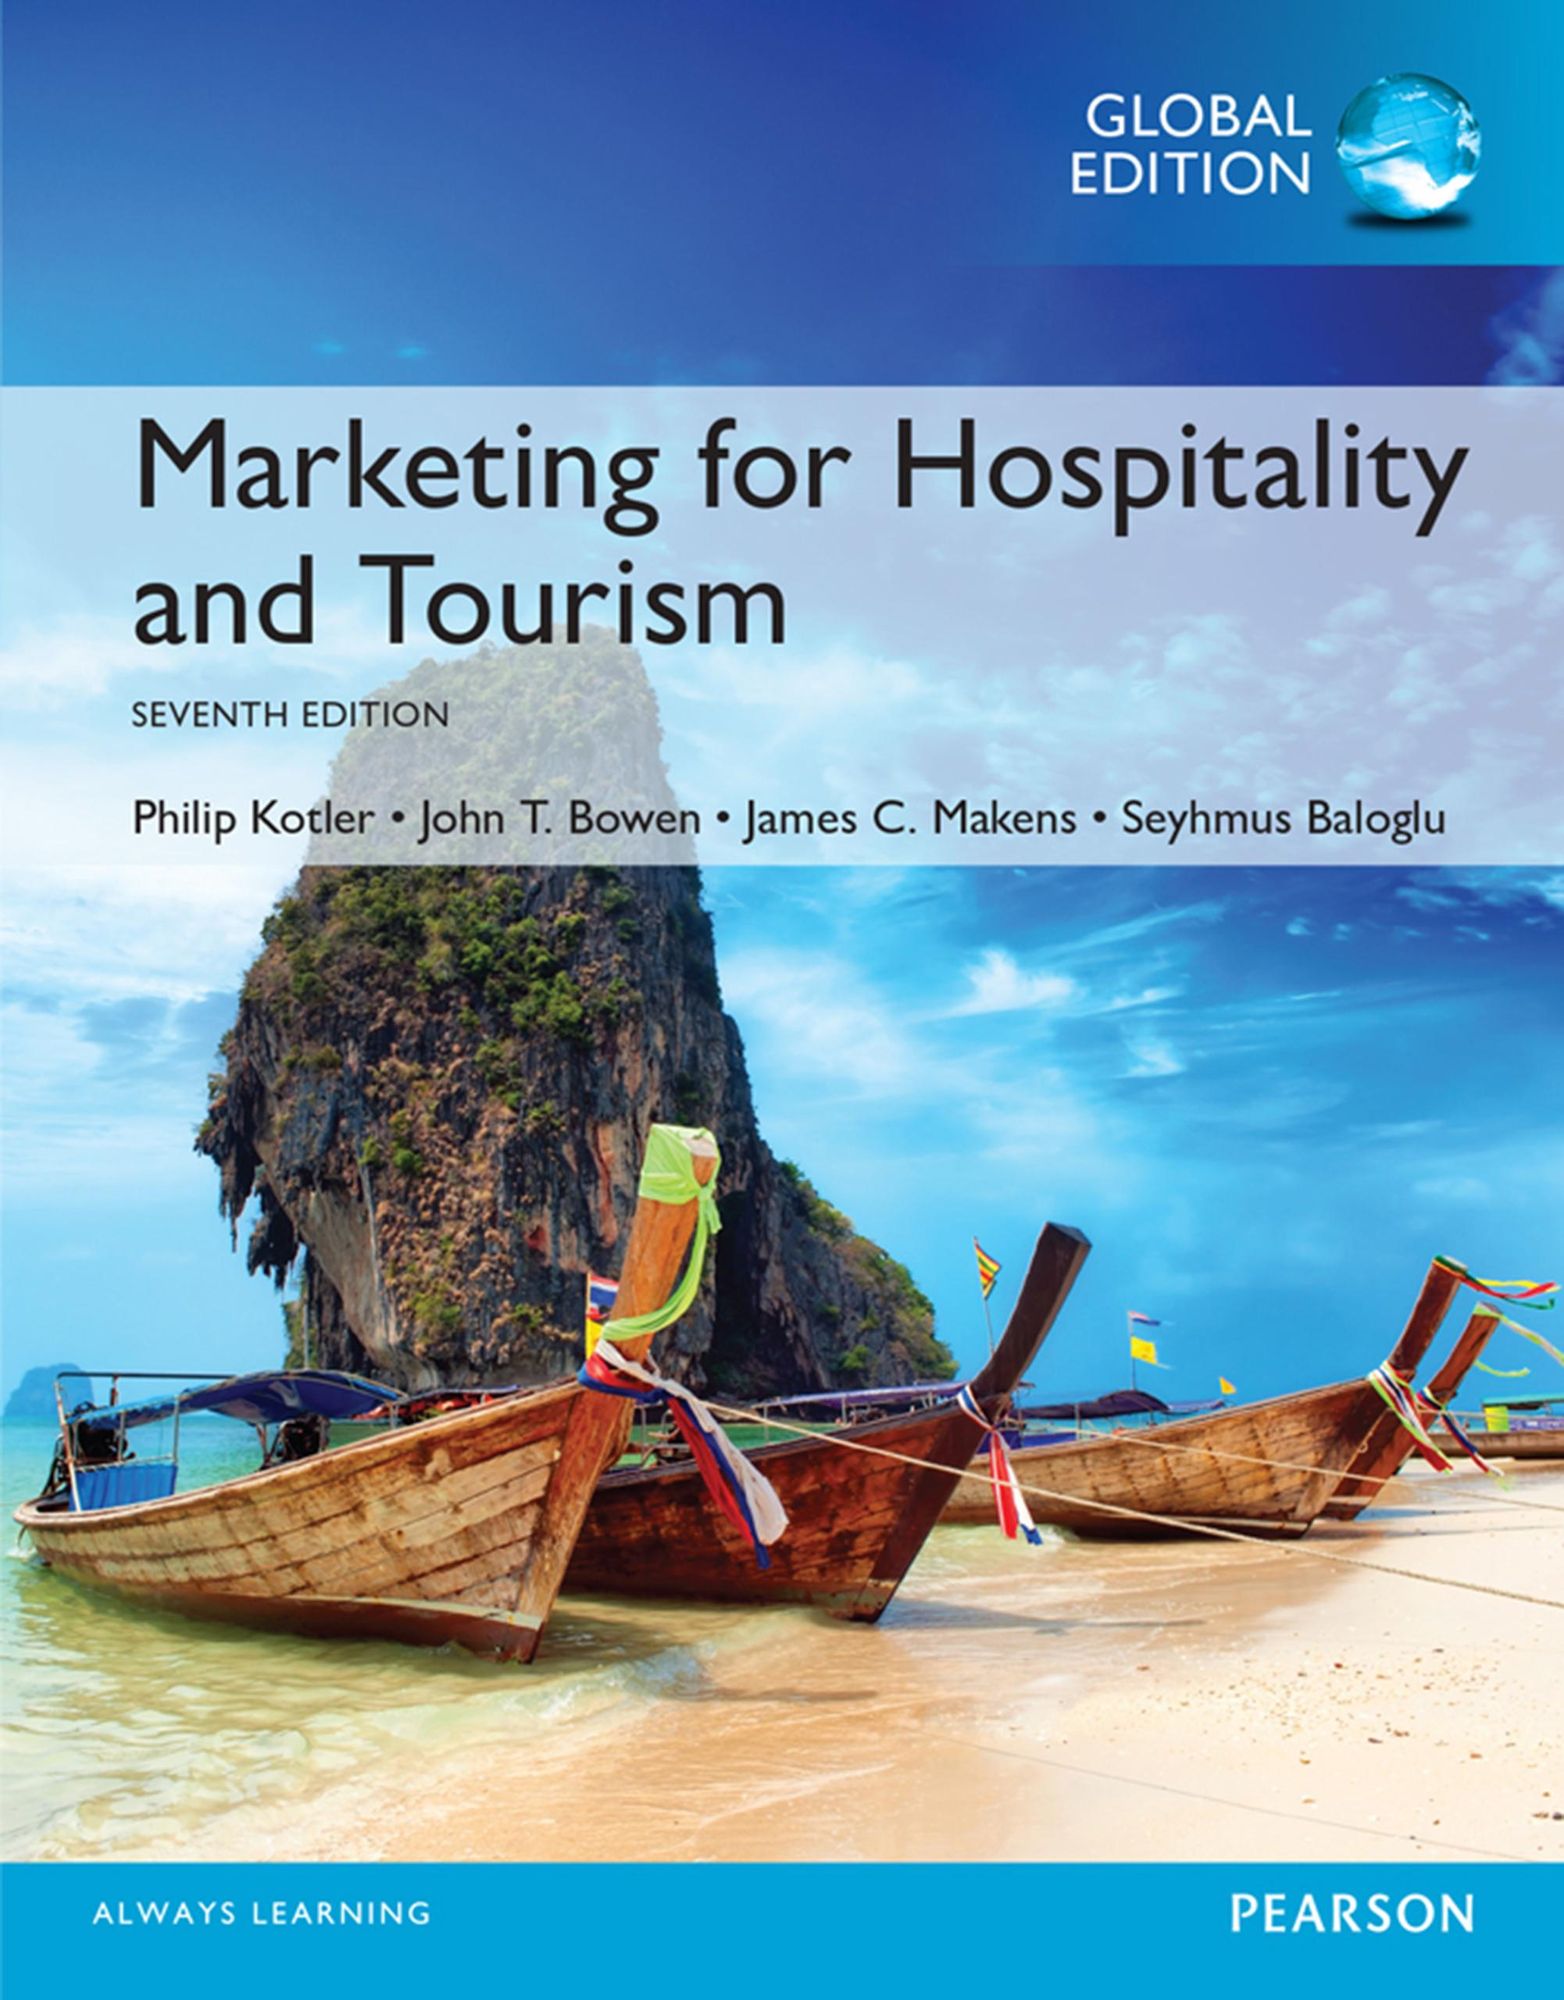 hospitality & tourism management second edition